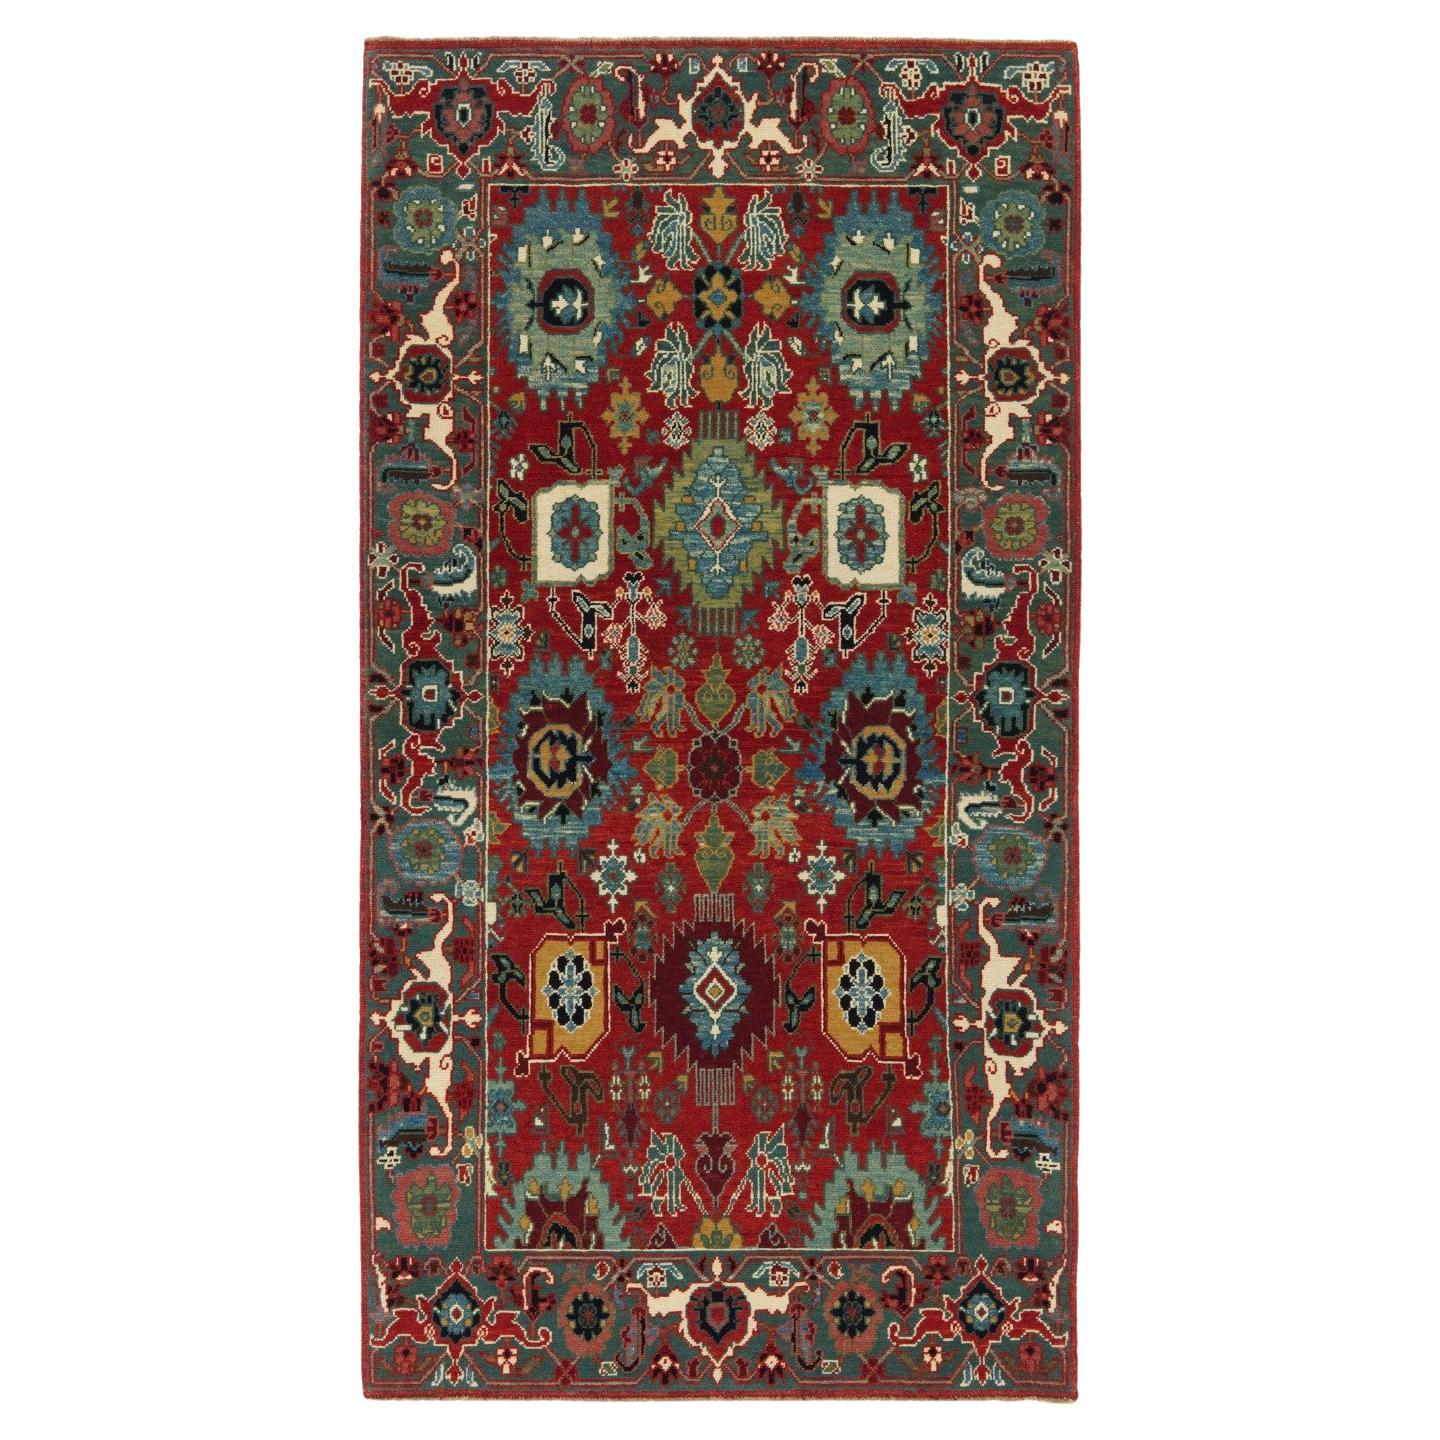 Ararat Rugs Palmettes and Flowers Lattice Rug Bidjar Revival Carpet Natural Dyed For Sale